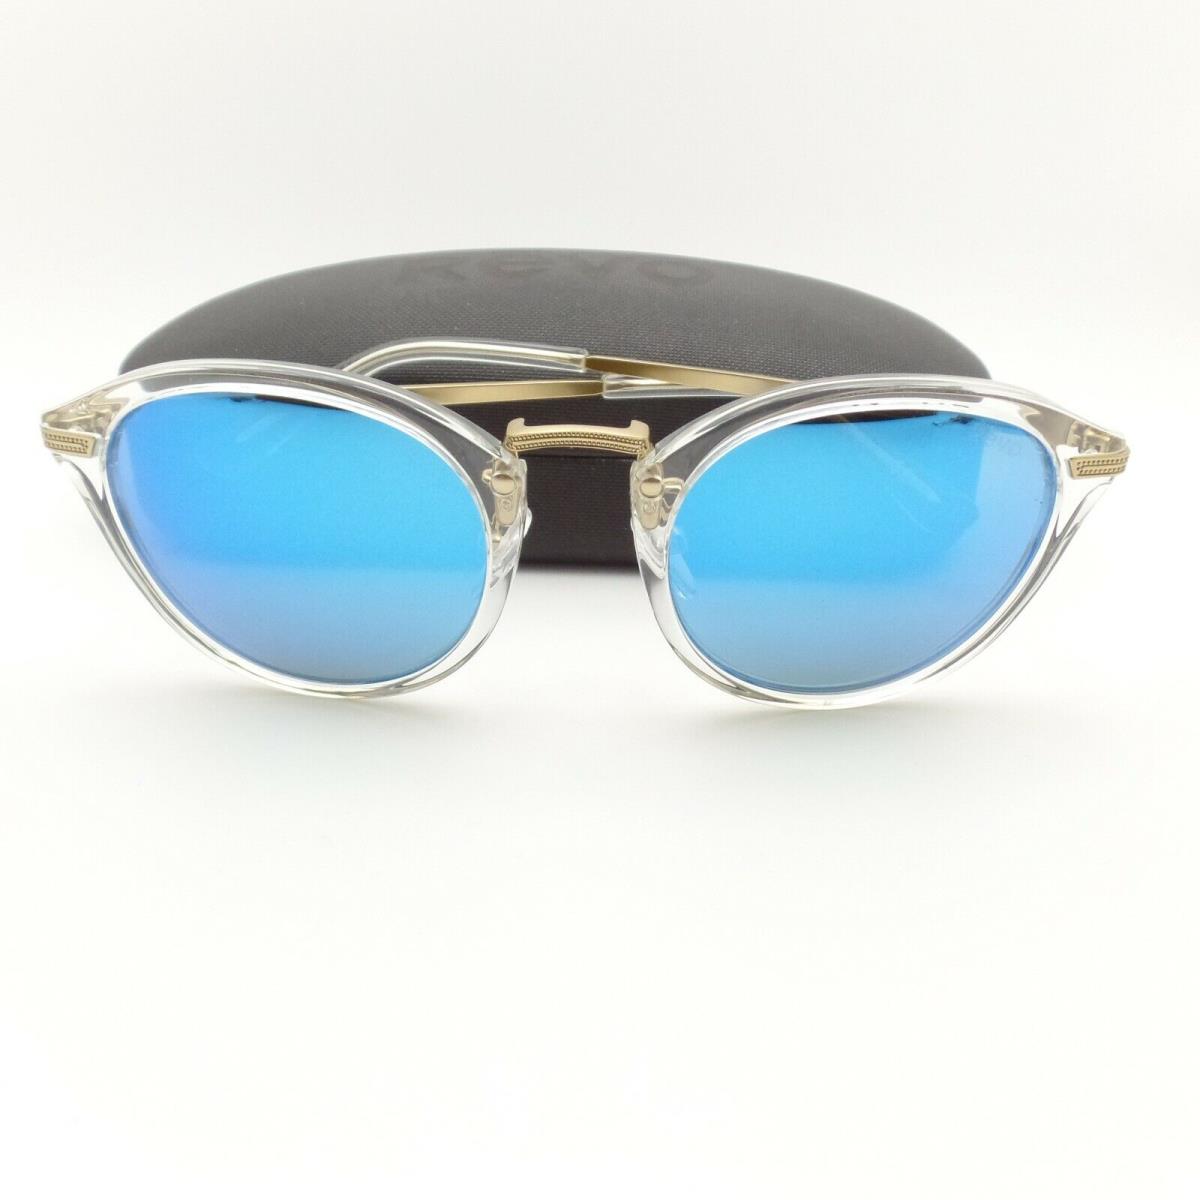 Revo sunglasses Quinn - Crystal Pale Gold Filigree Frame, Blue Water Lens